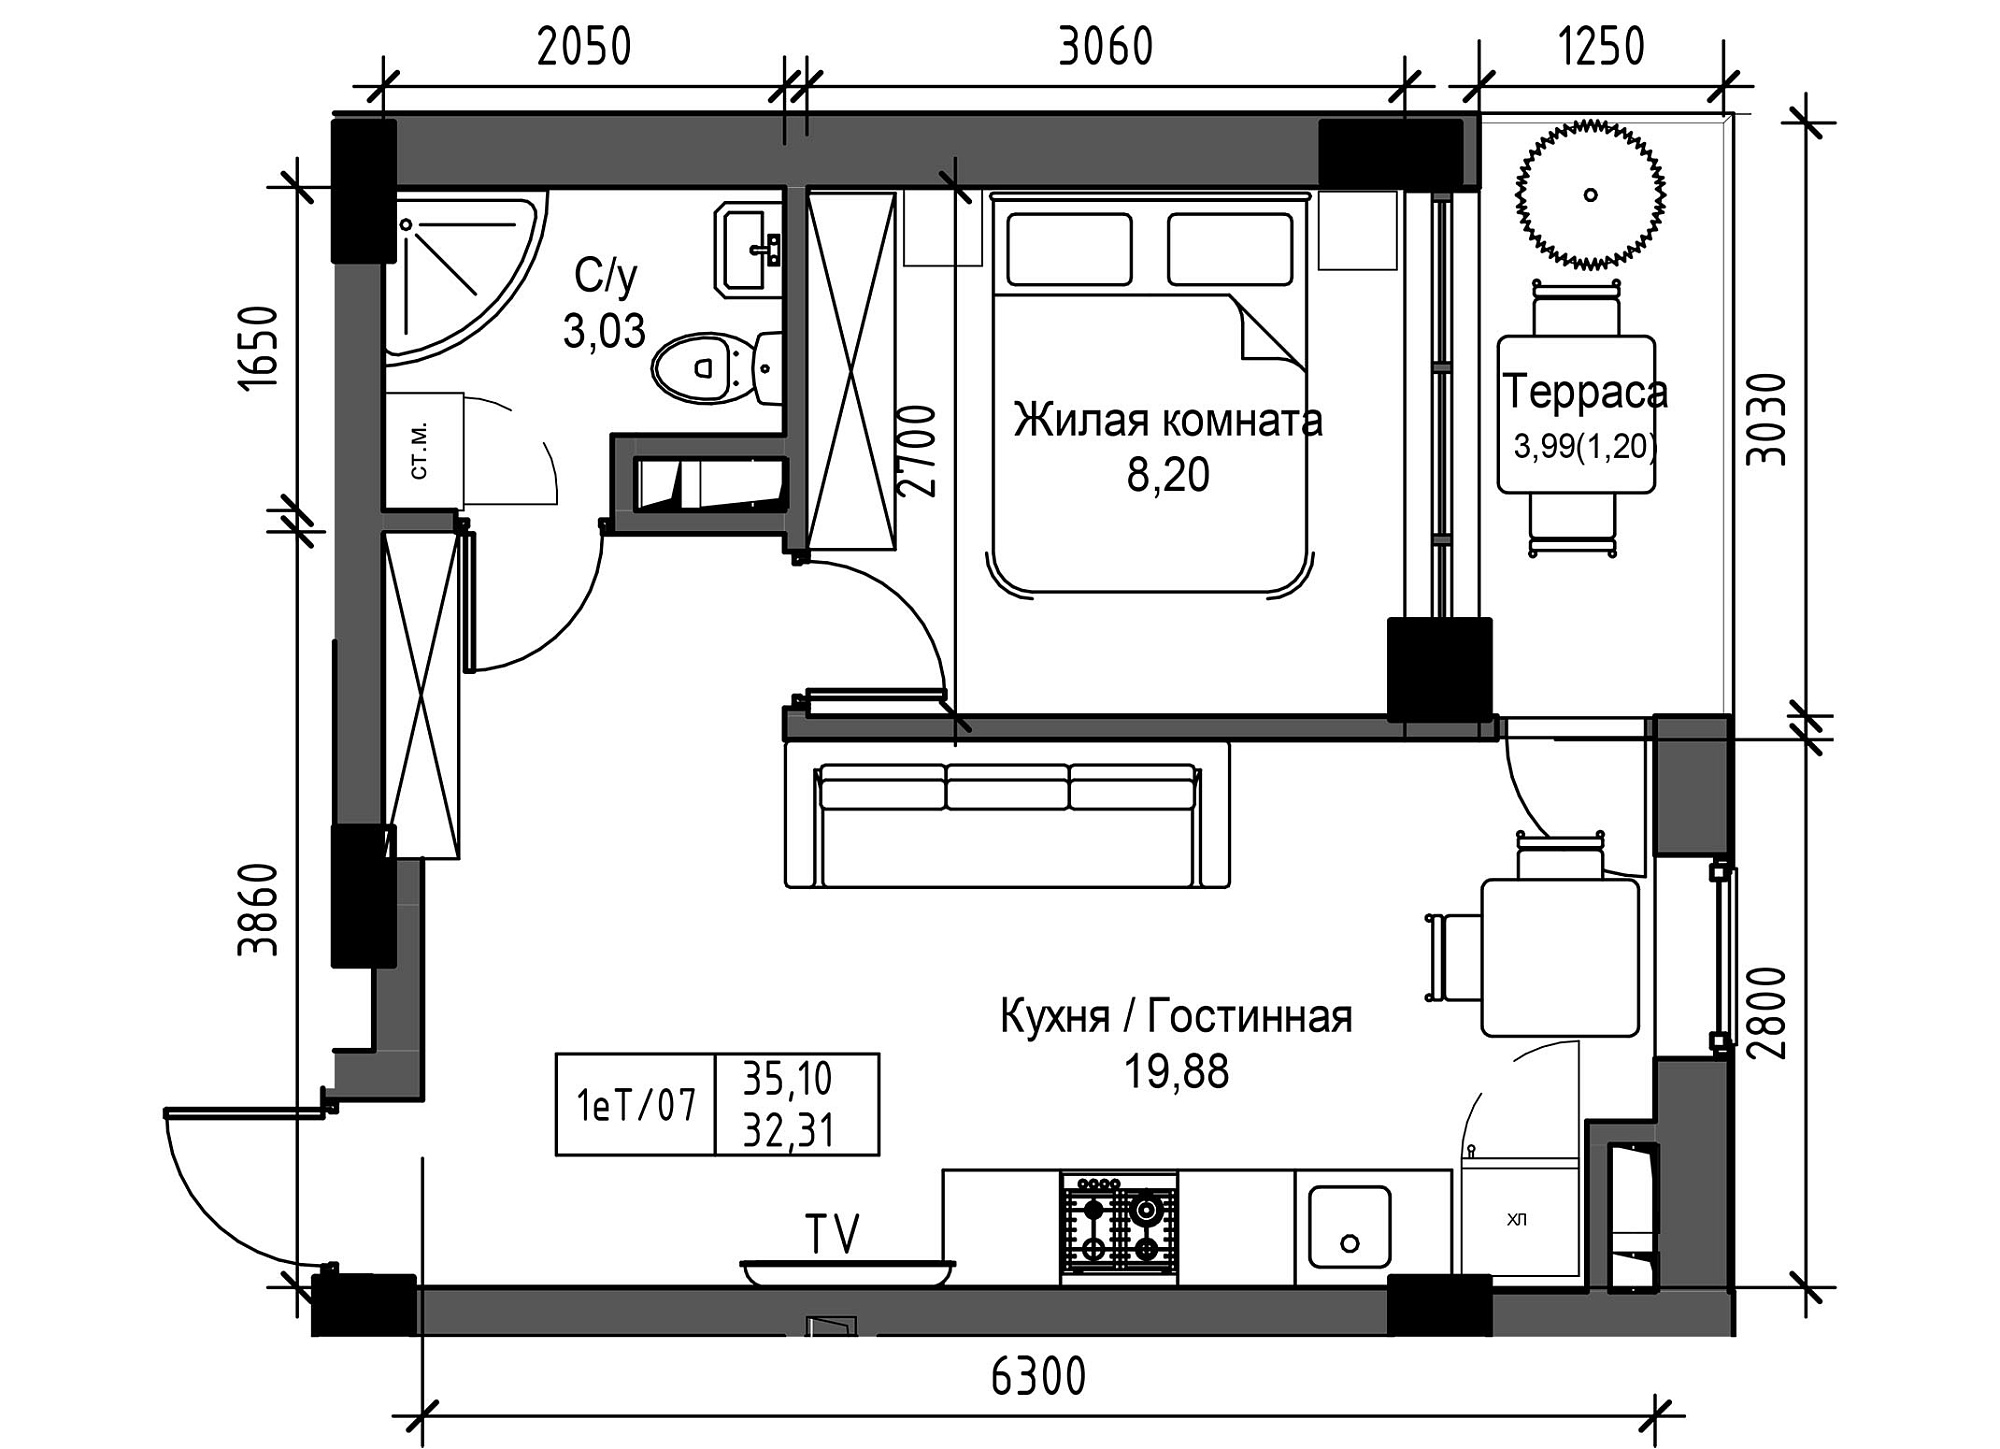 Планування 1-к квартира площею 32.31м2, UM-003-06/0065.